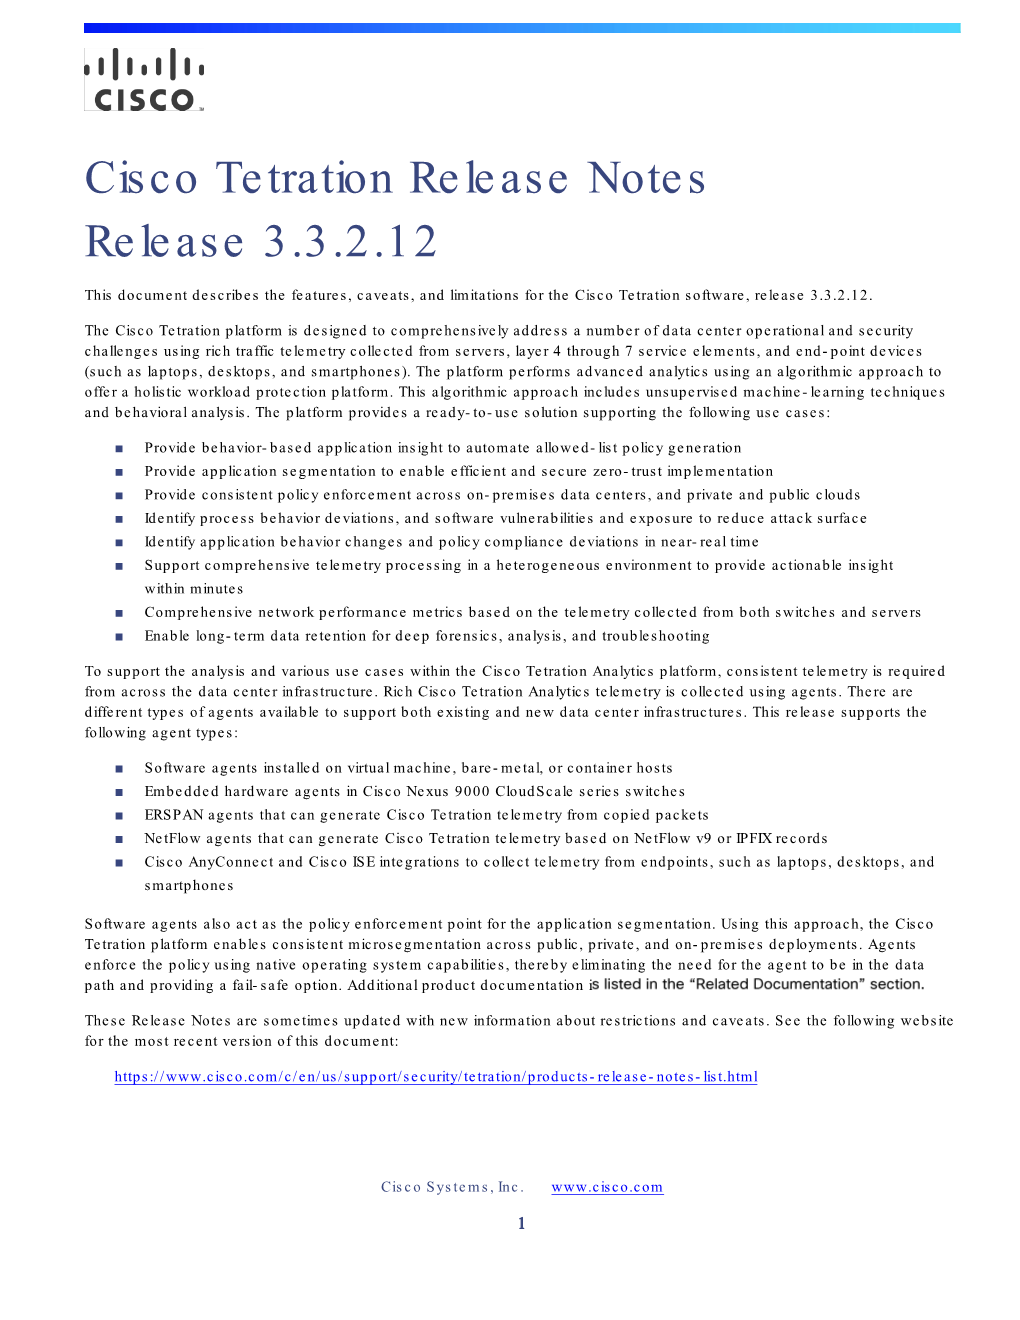 Cisco Tetration Release Notes, Release 3.3.2.12